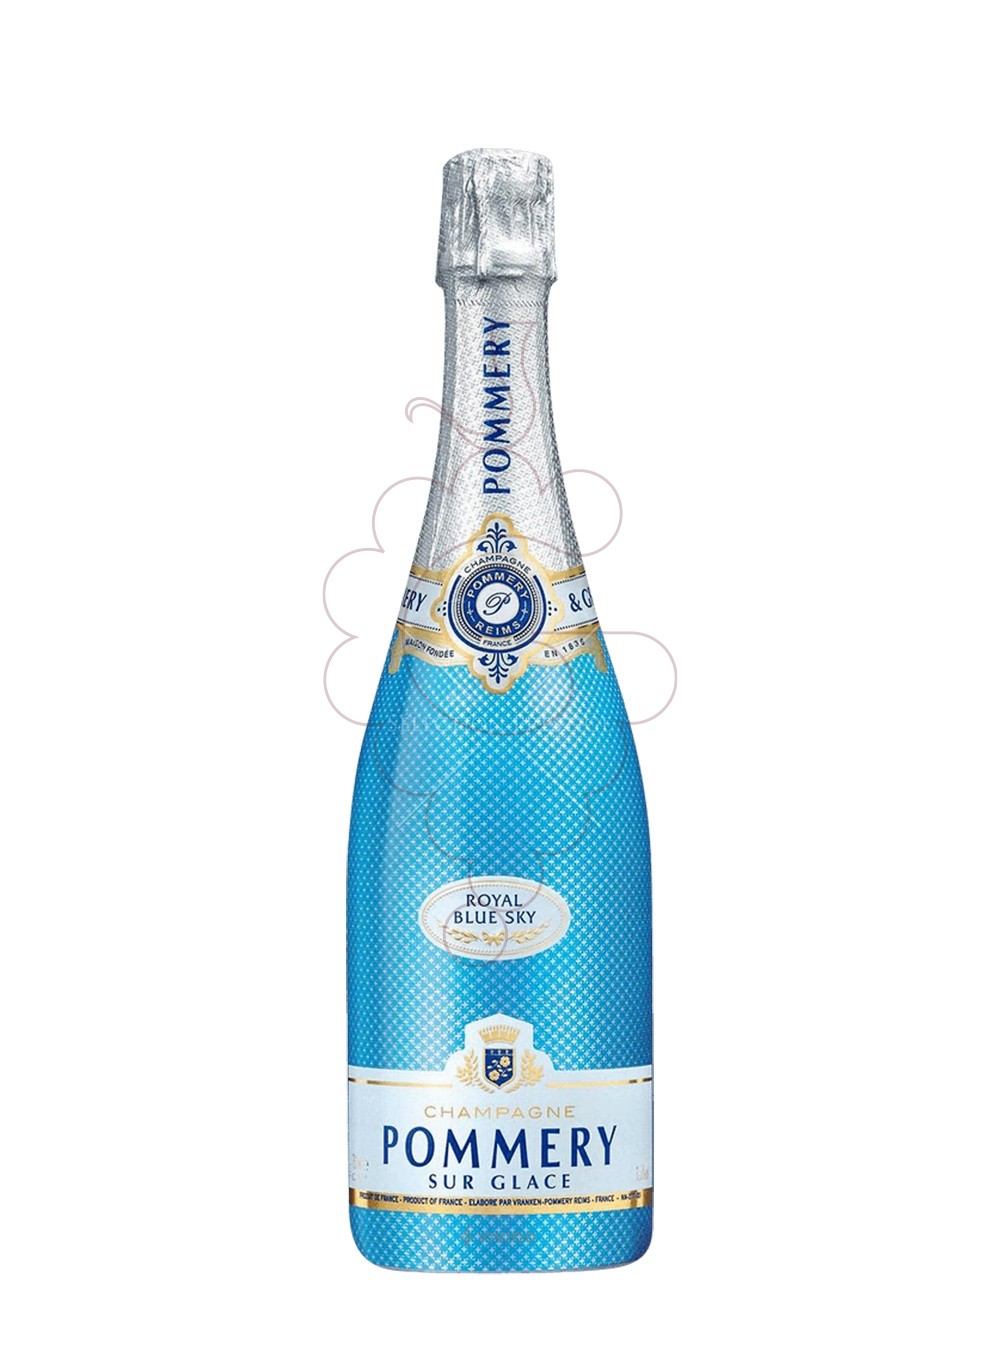 Foto Pommery sur glace blue sky vino espumoso